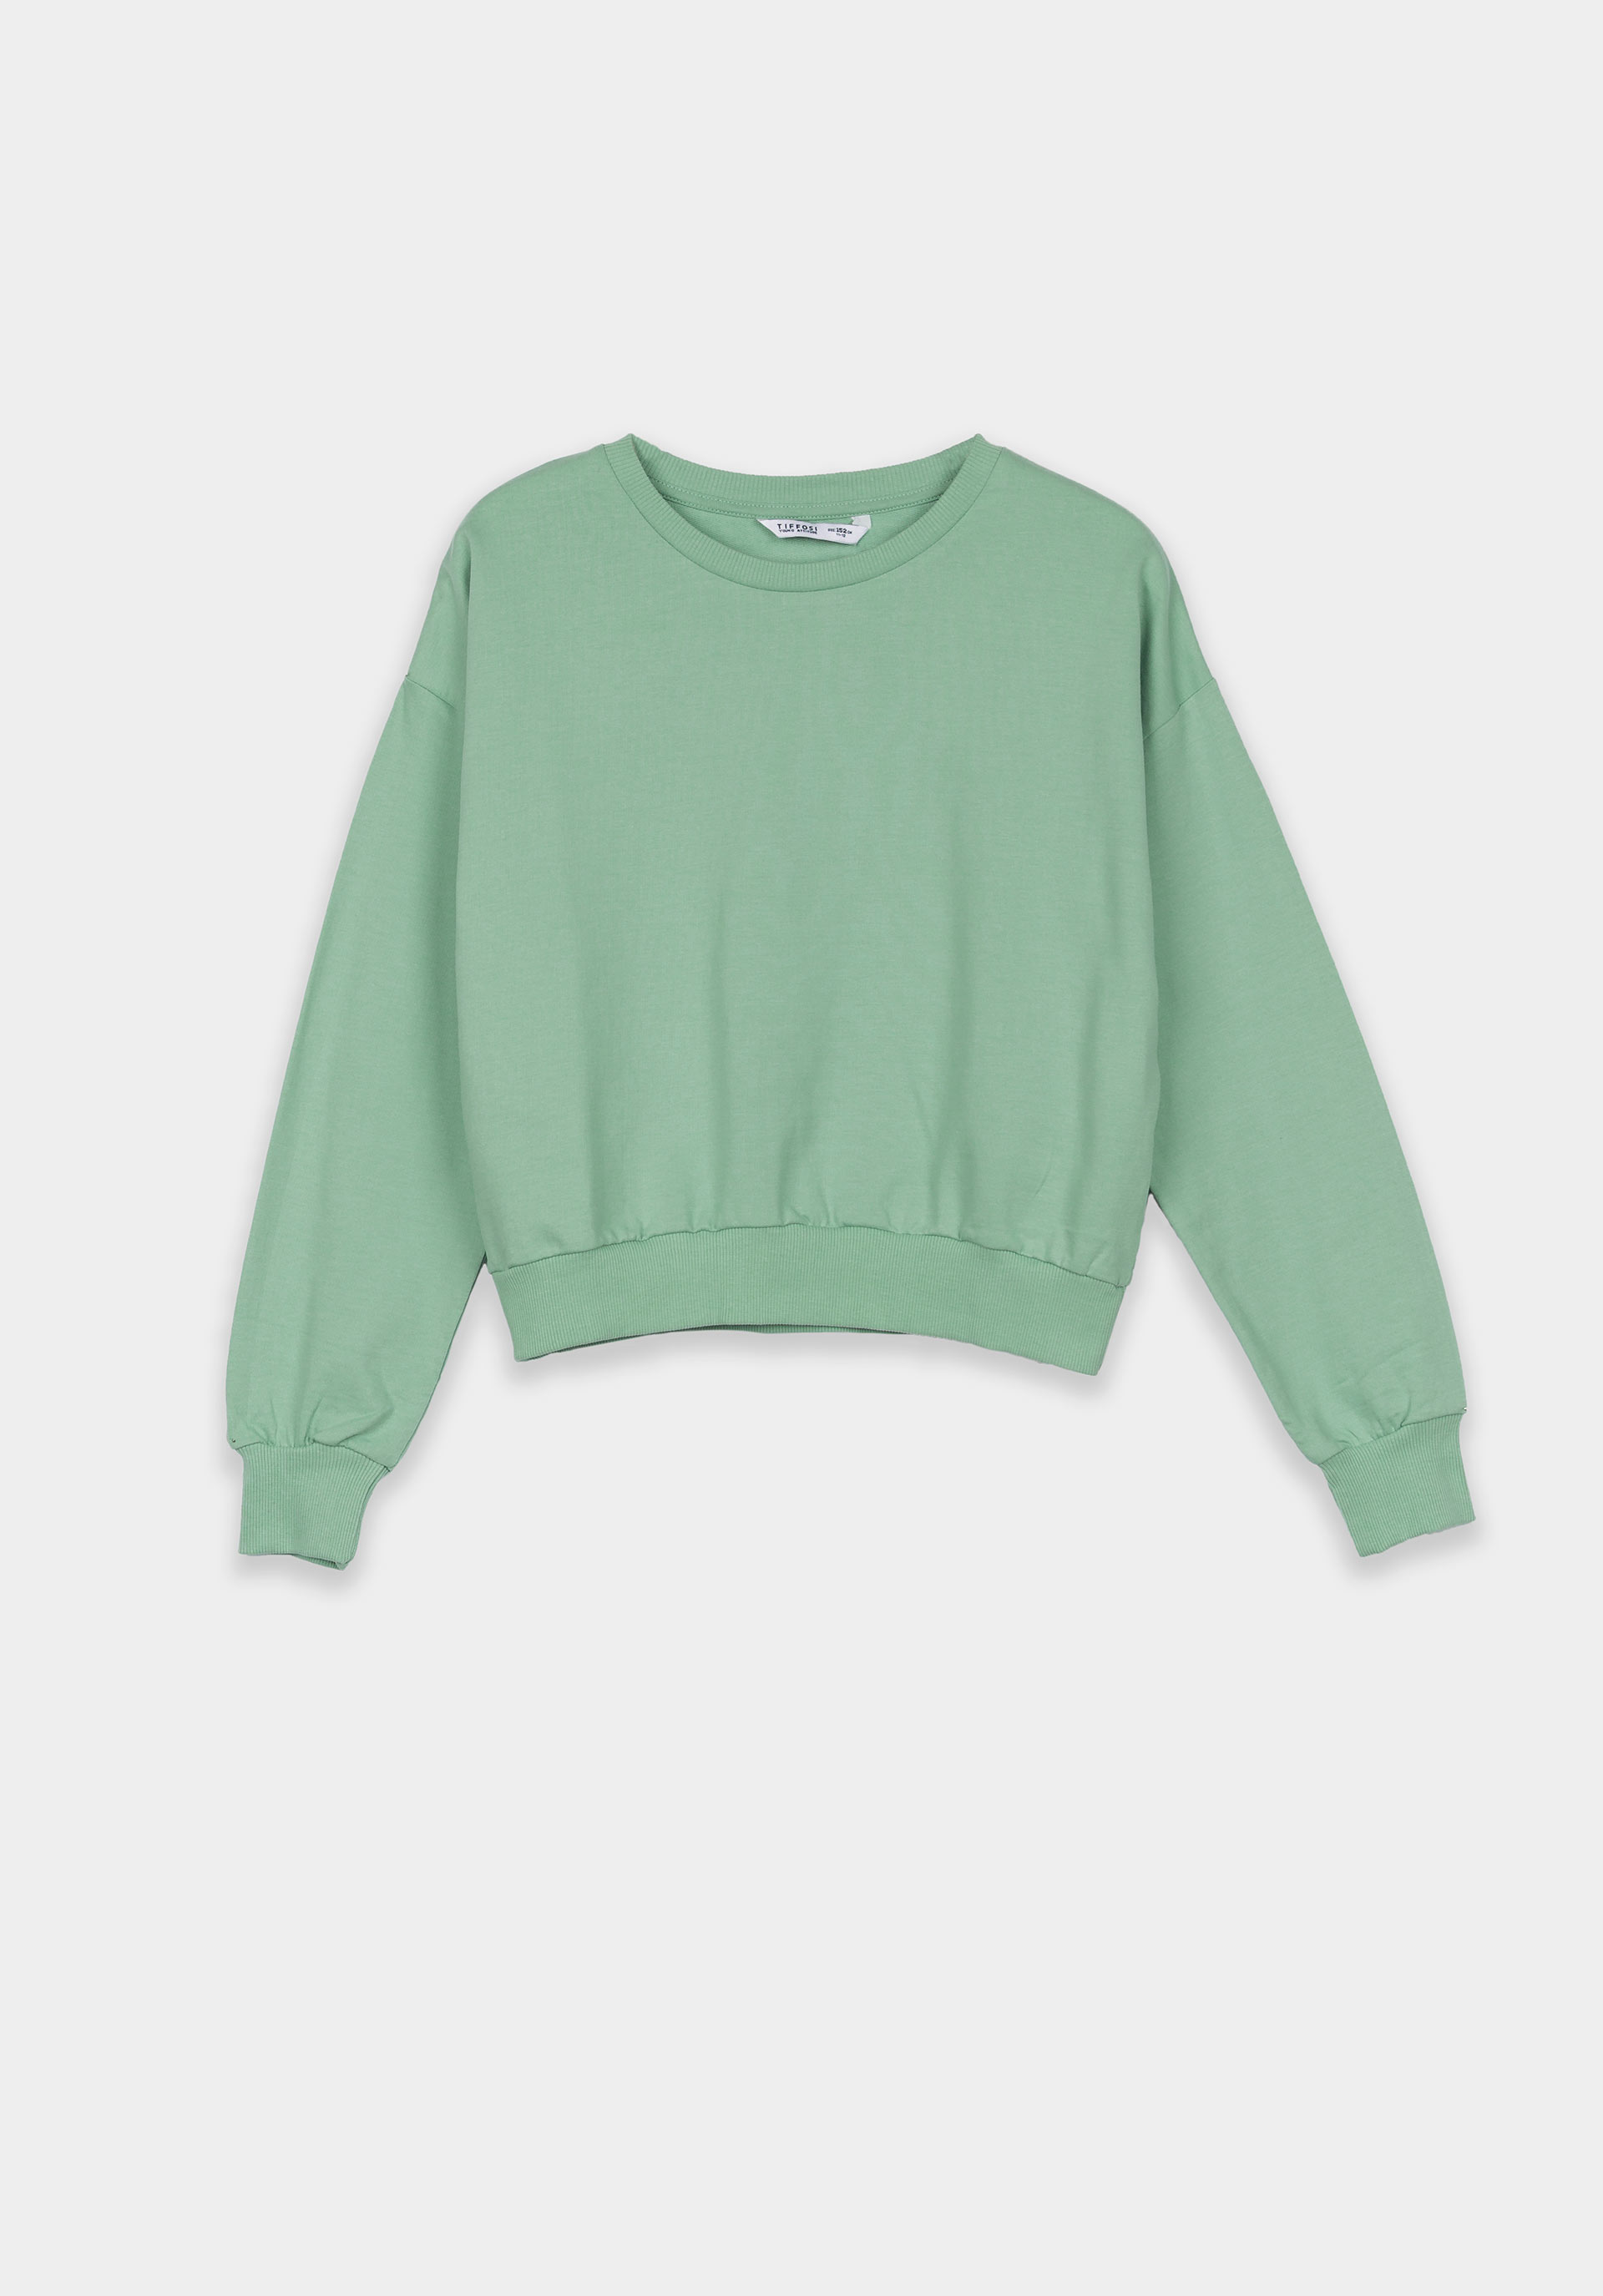 Tiffosi sweater basic mint